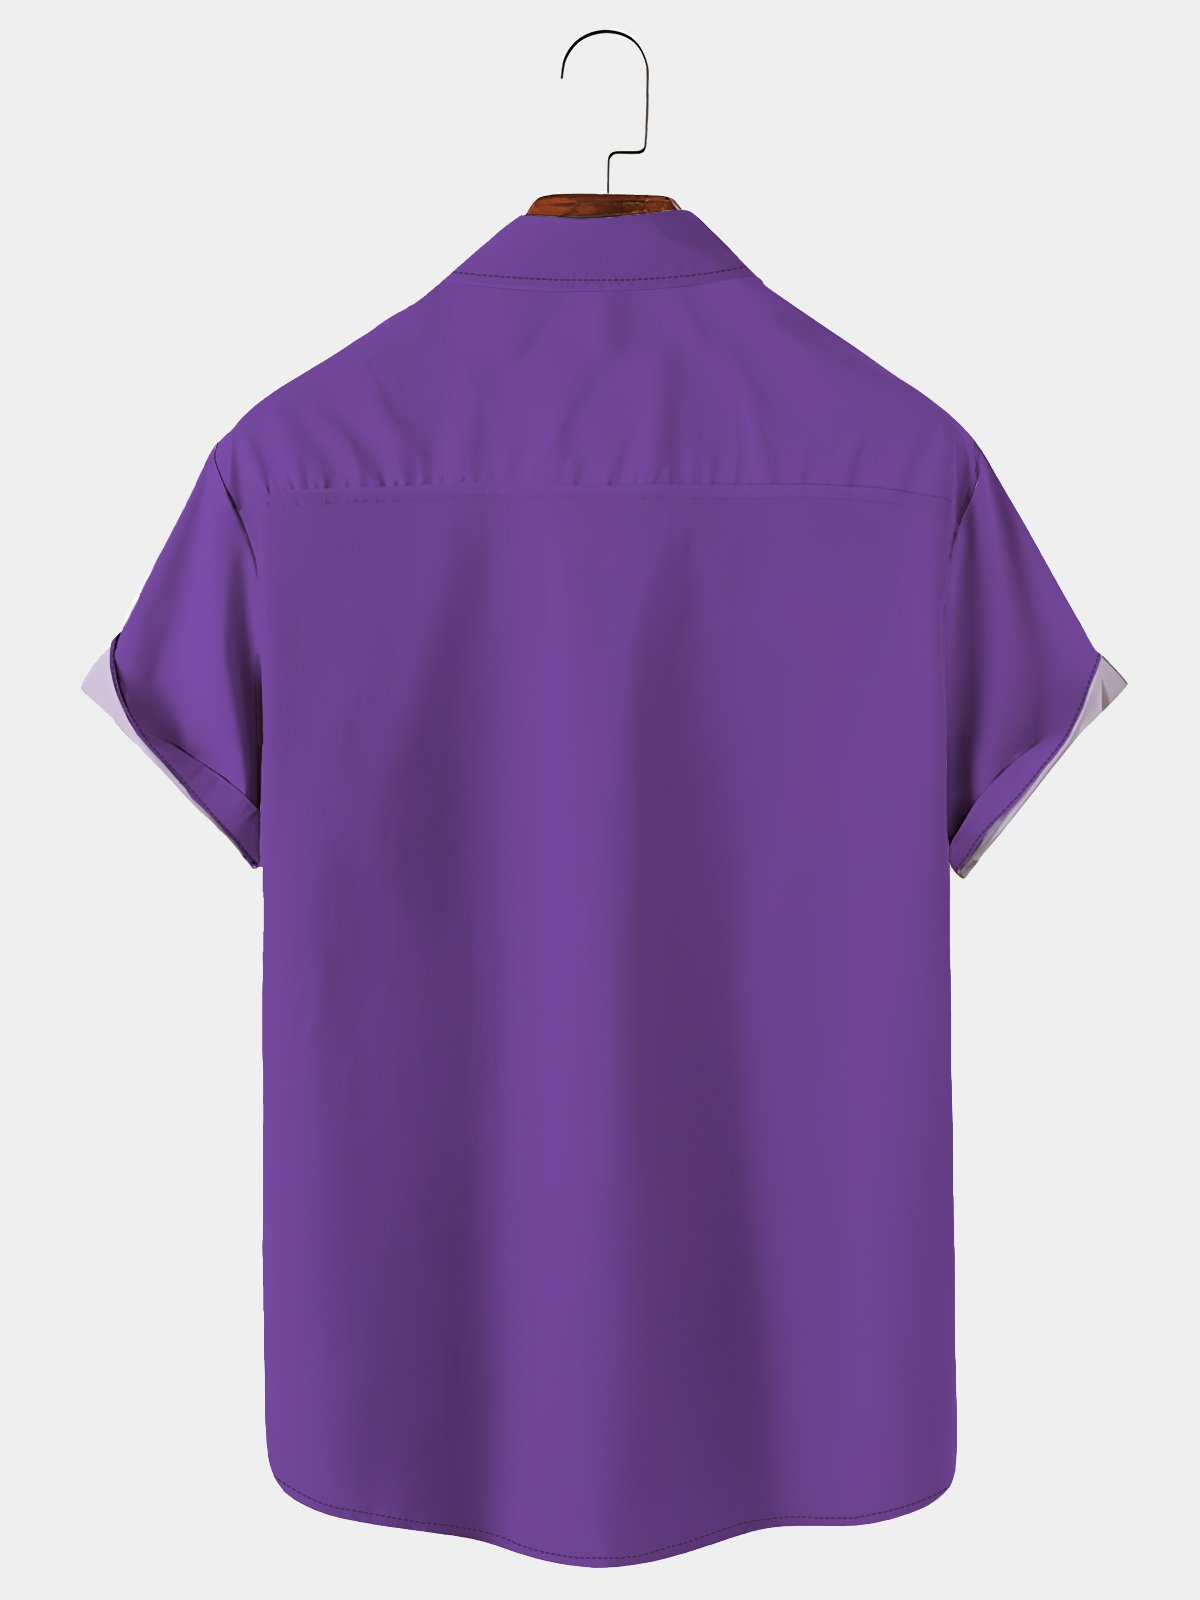 Royaura® Mardi Gras Holiday Carnival Purple Stripe Croxin Print Shirt Plus Size Holiday Shirt